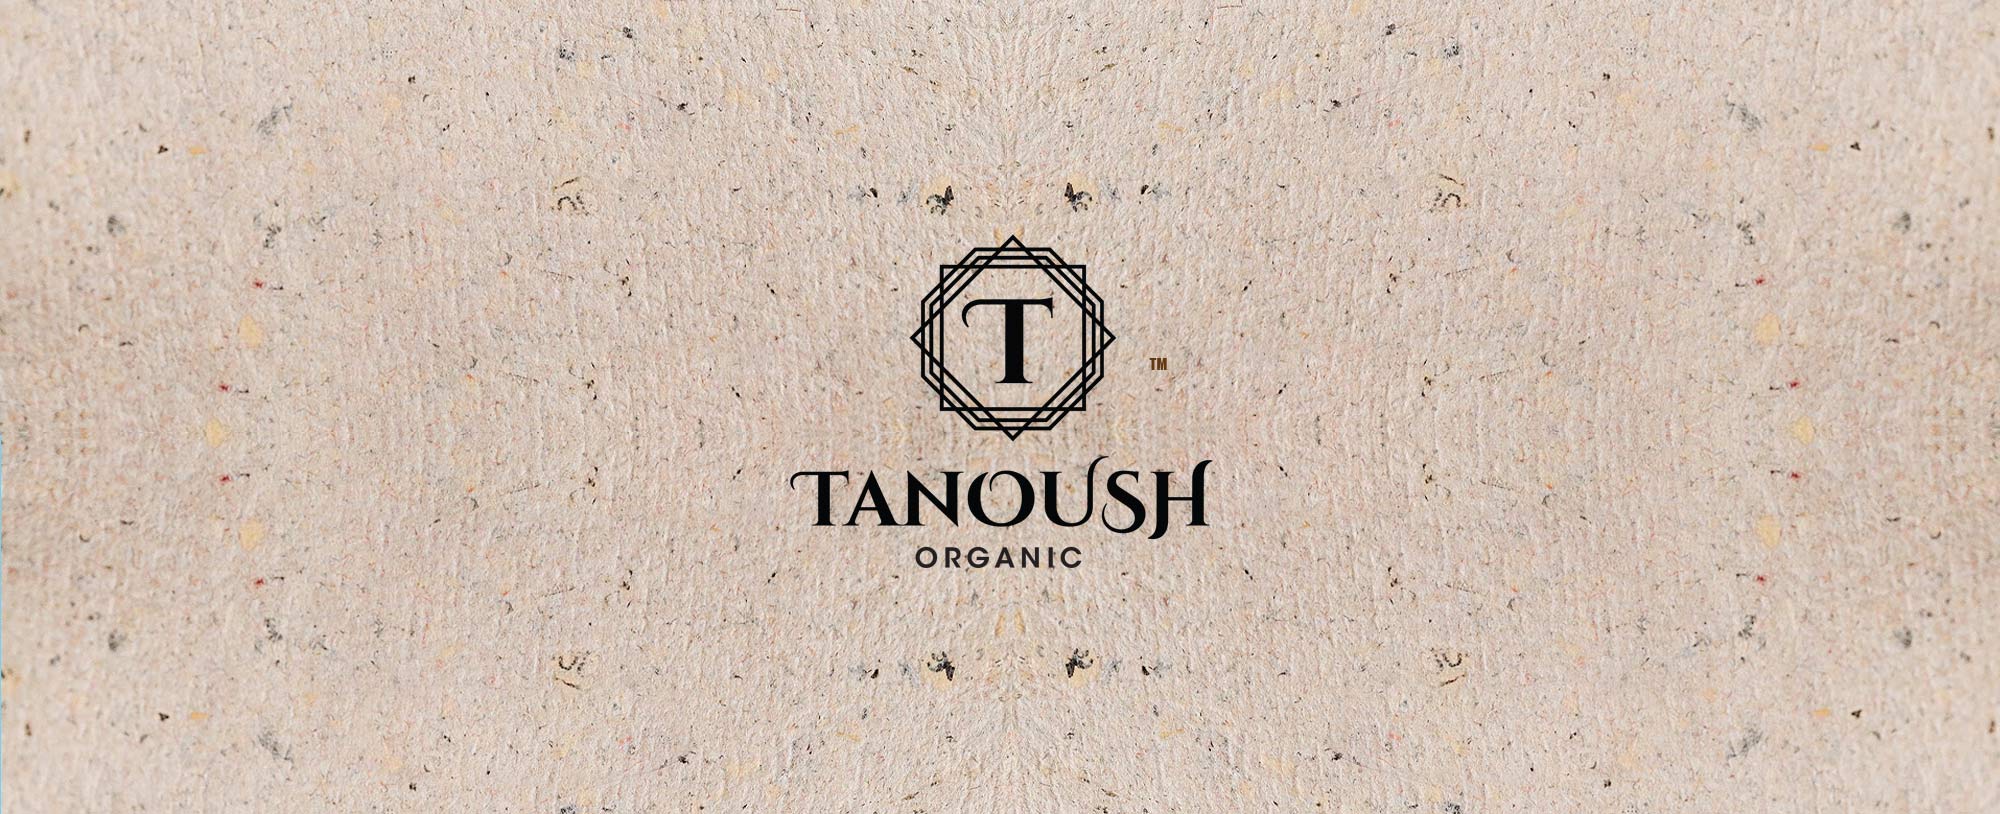 tanoush-logo